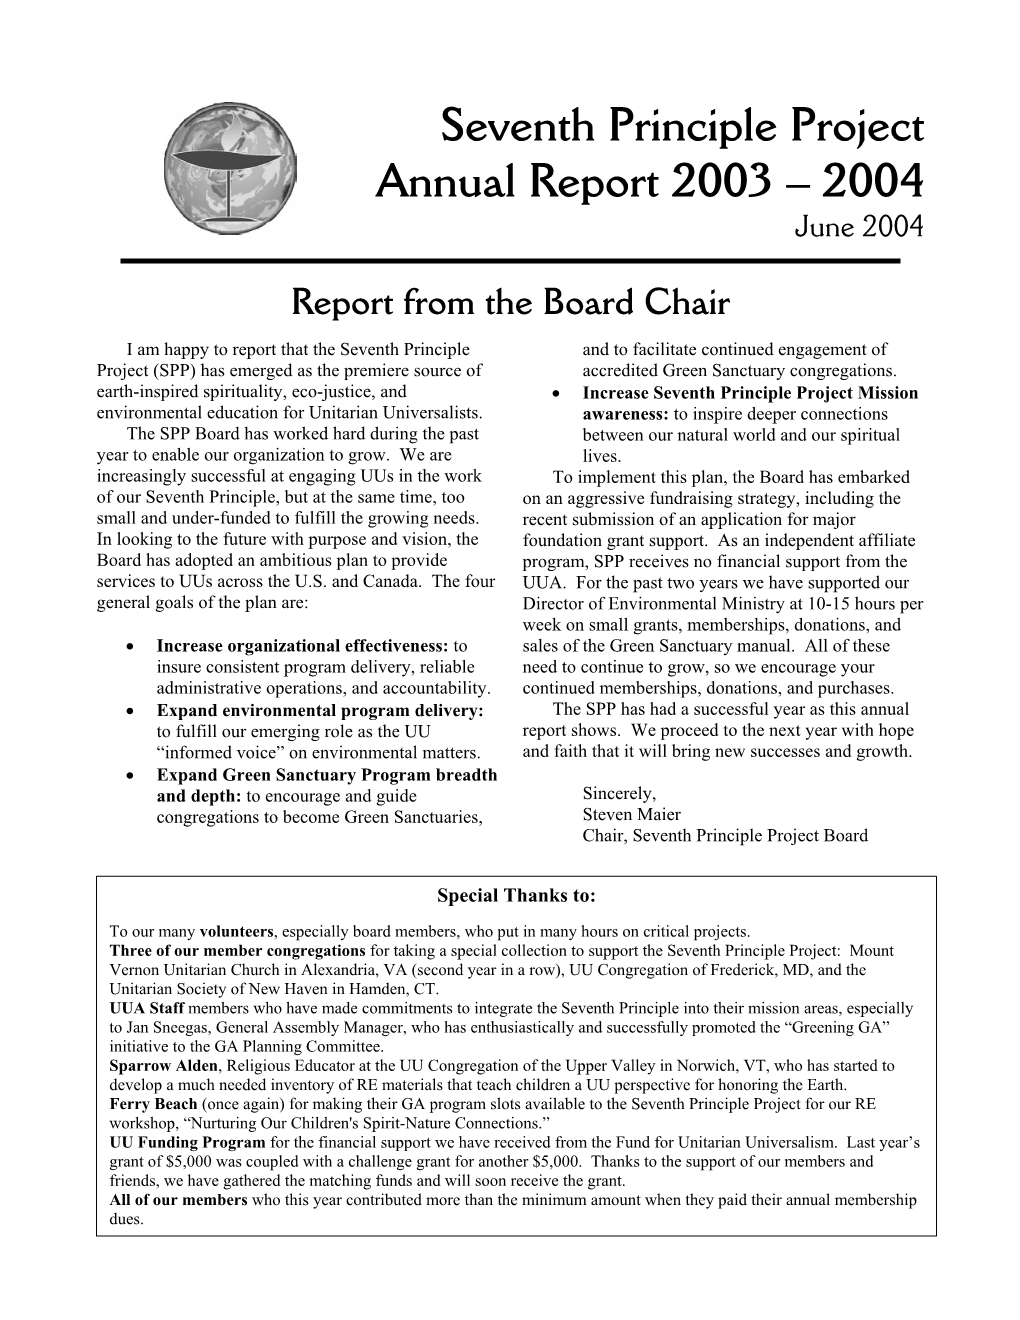 Seventh Principle Project Annual Report 2003 – 2004